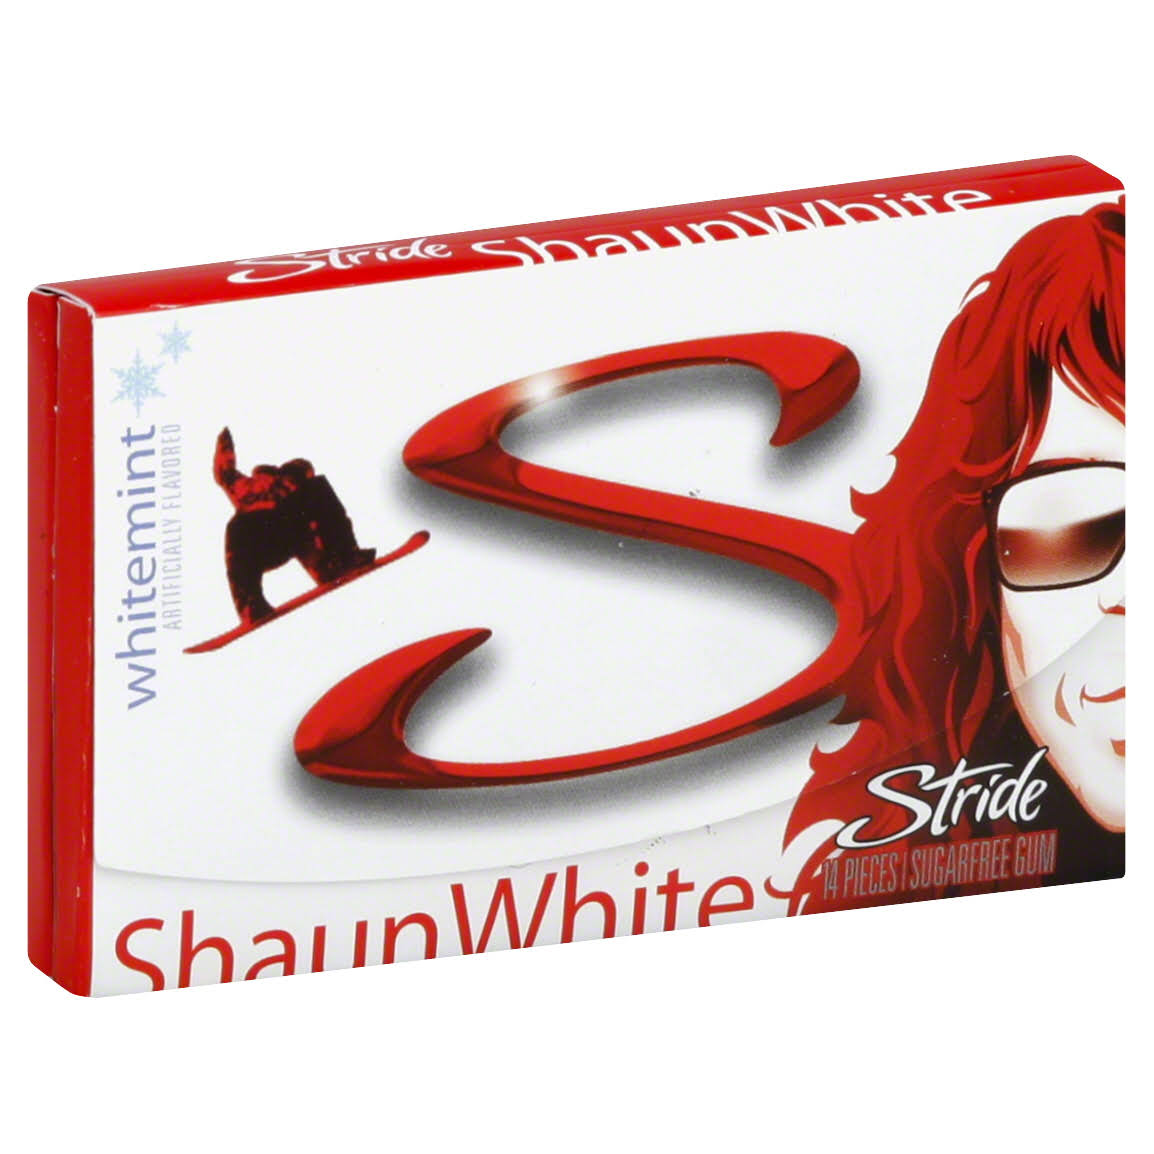 Stride Shaun White Gum - 14 Count